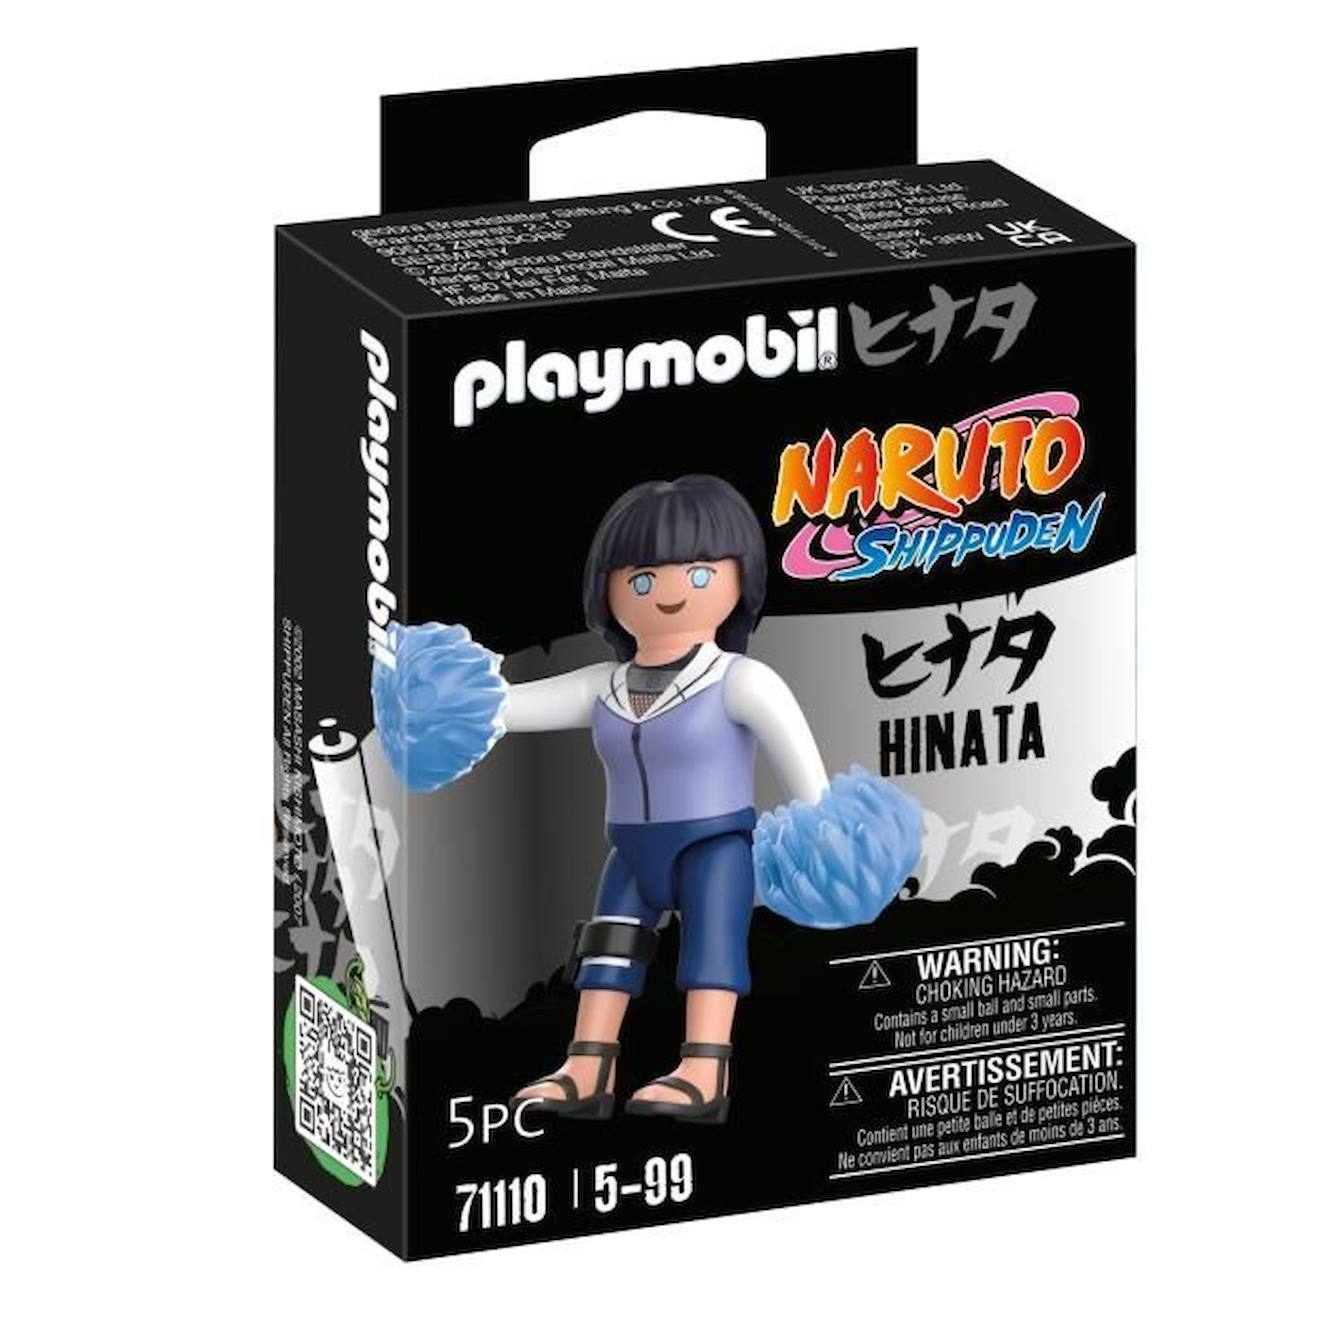 Playmobil - Naruto Shippuden - Hinata - Figurine De Ninja Avec Accessoires Bleu